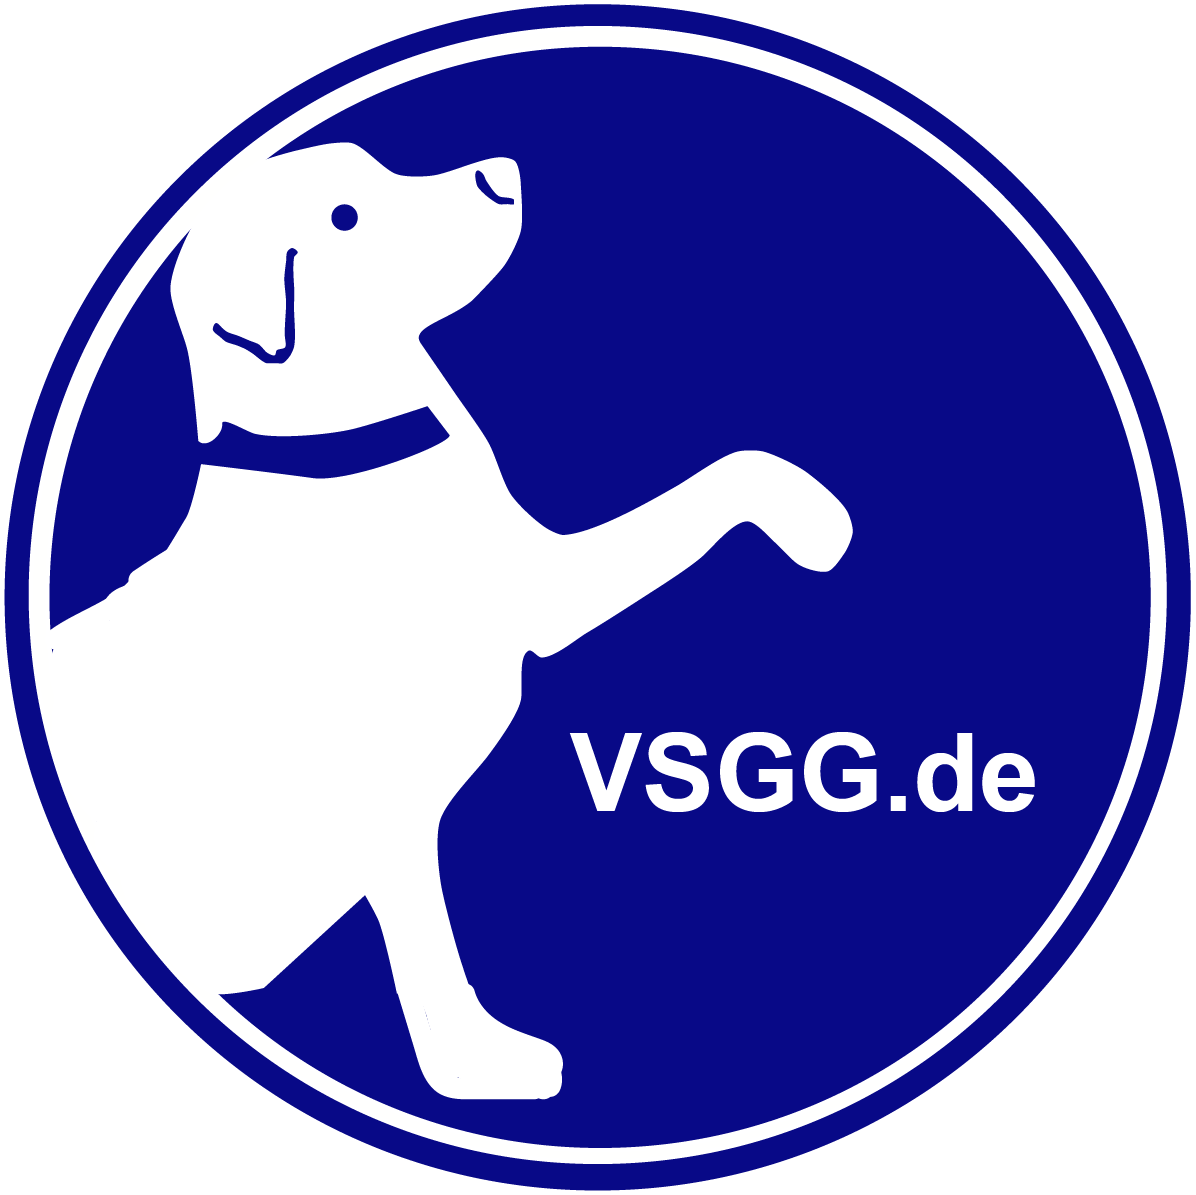 VSGG - Image of a dog